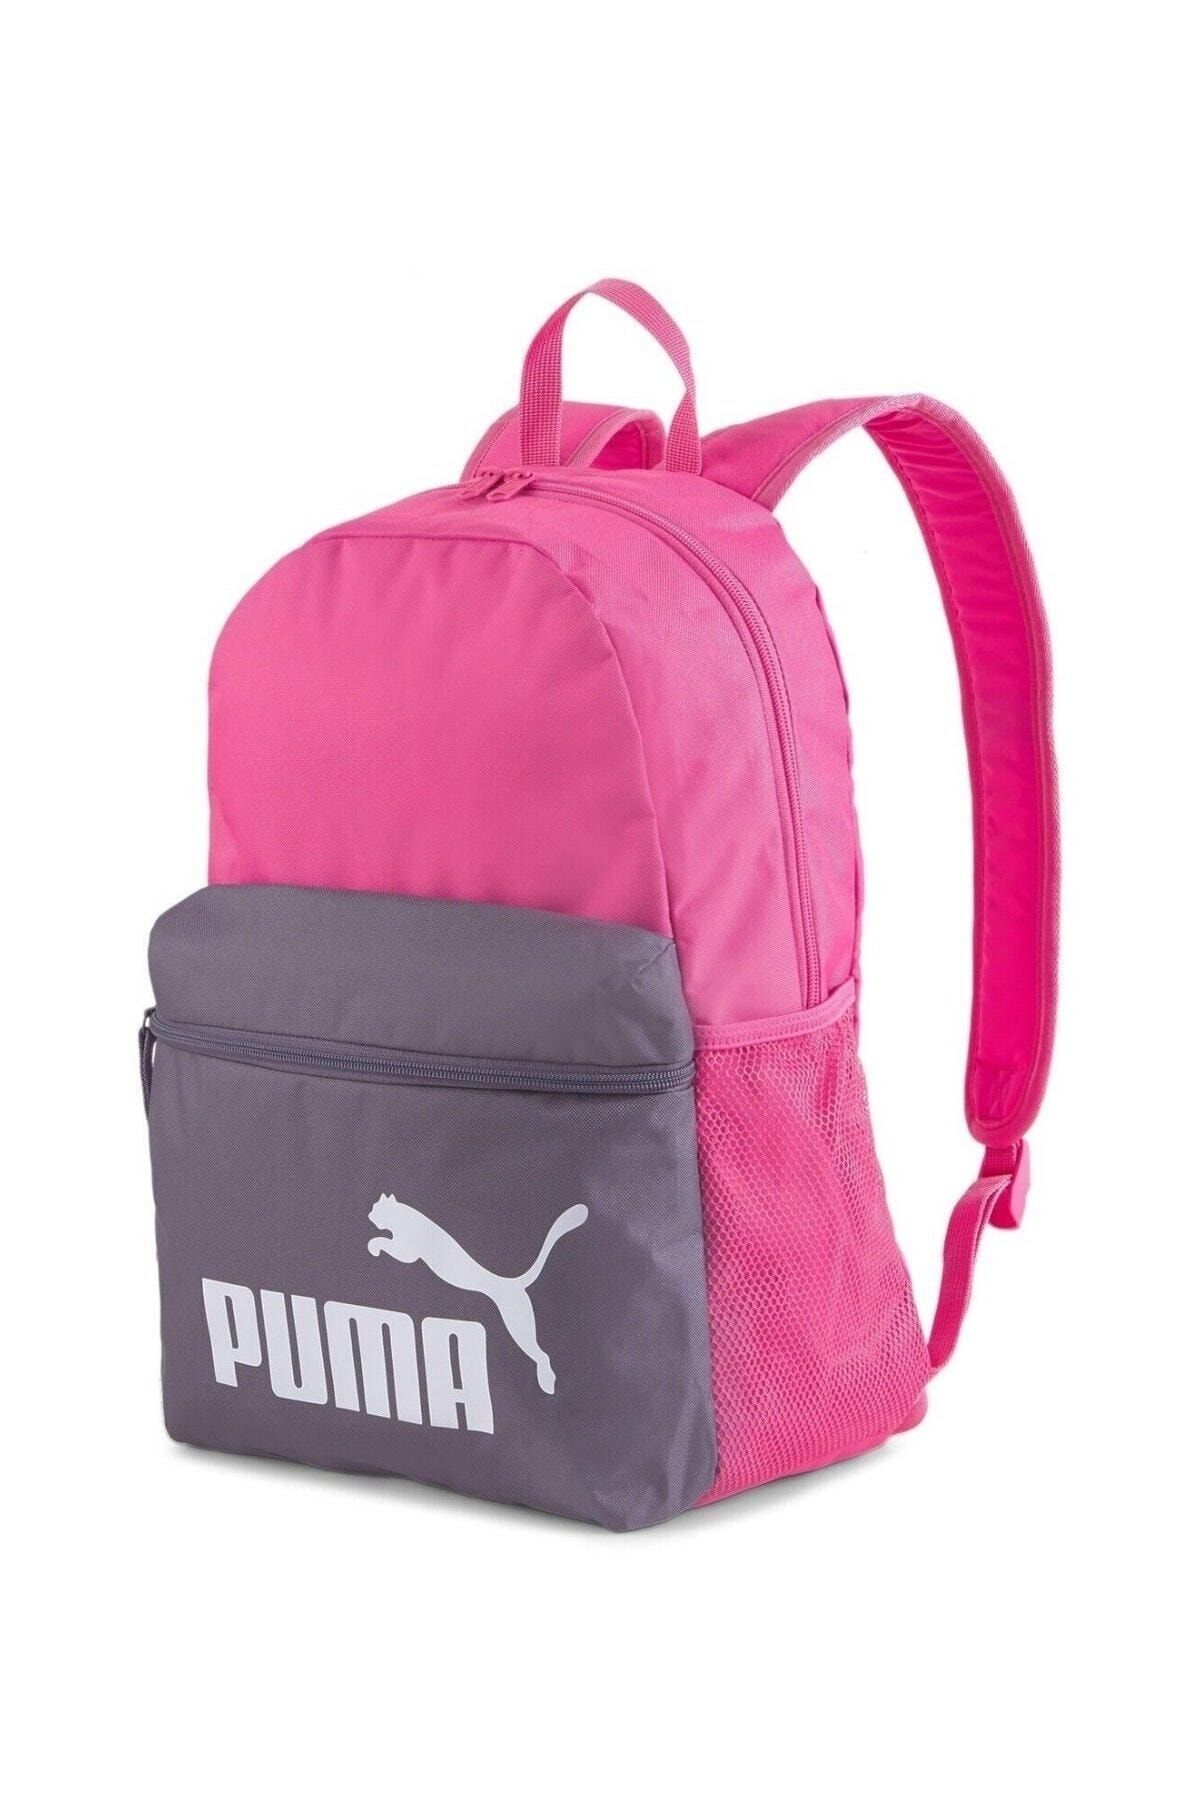 Puma Phase Backpack Sunset Pink-blocking Unisex Gün Batımı Pembe Sırt Çantası 075487 81